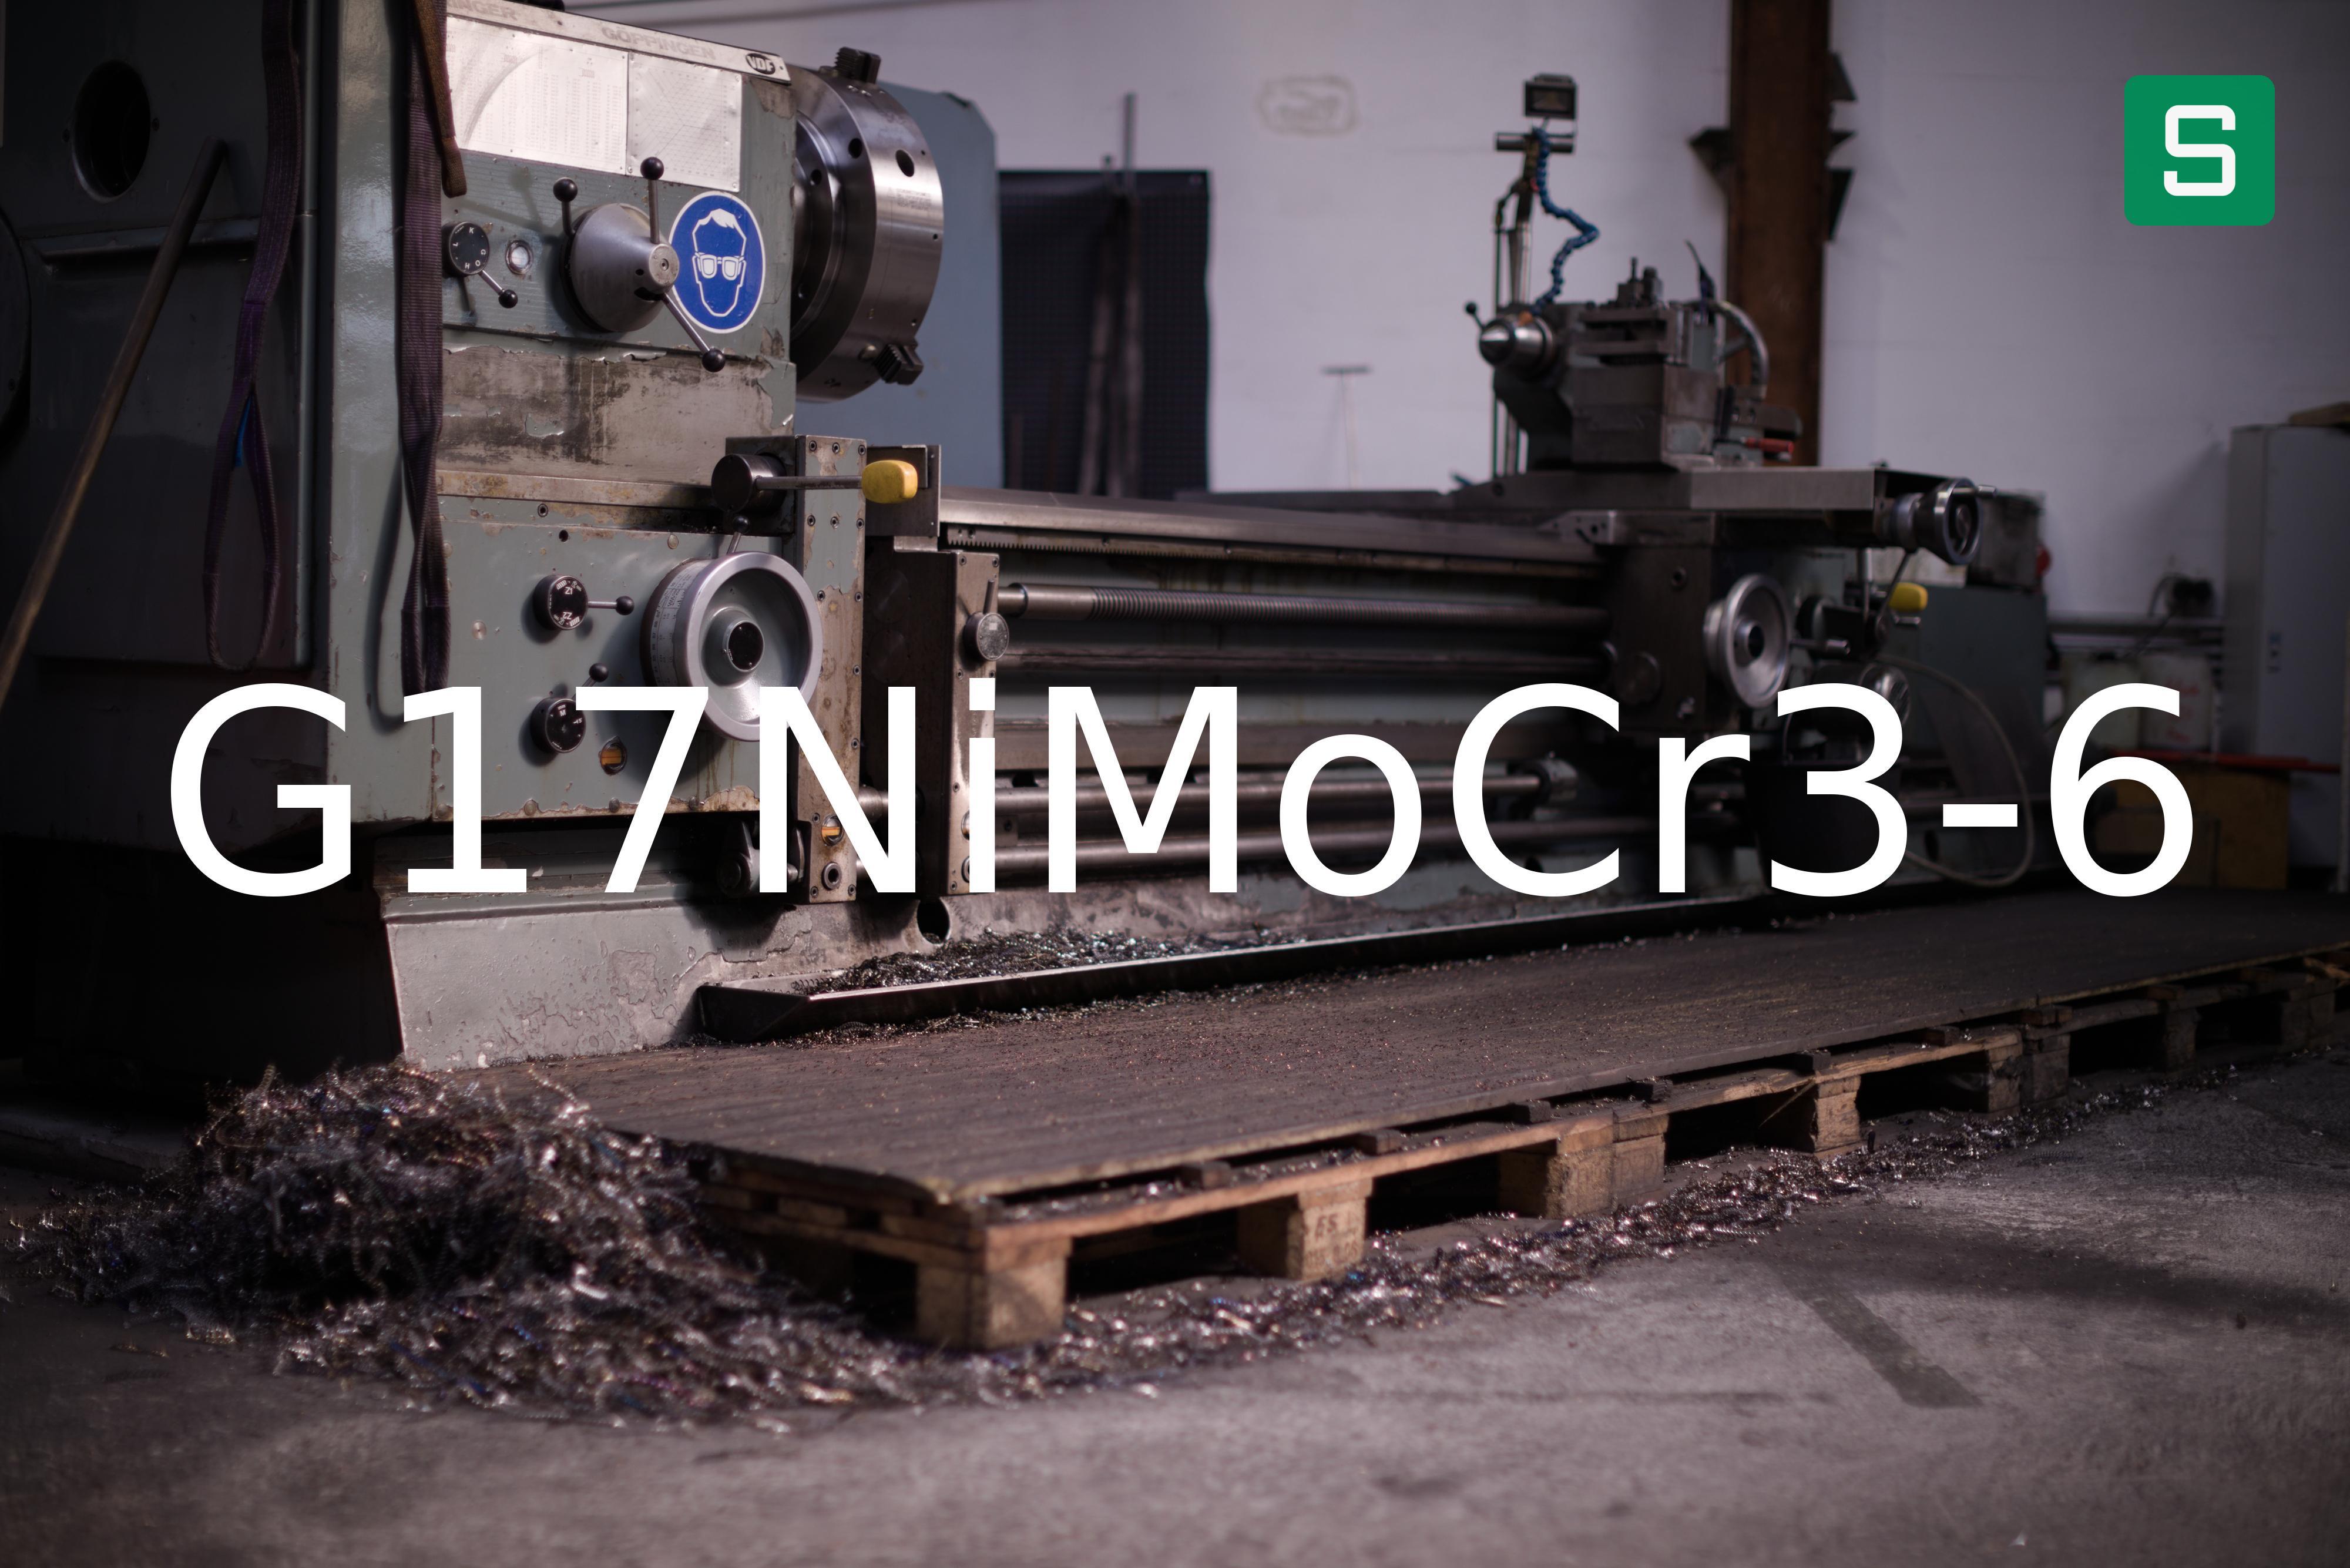 Steel Material: G17NiMoCr3-6